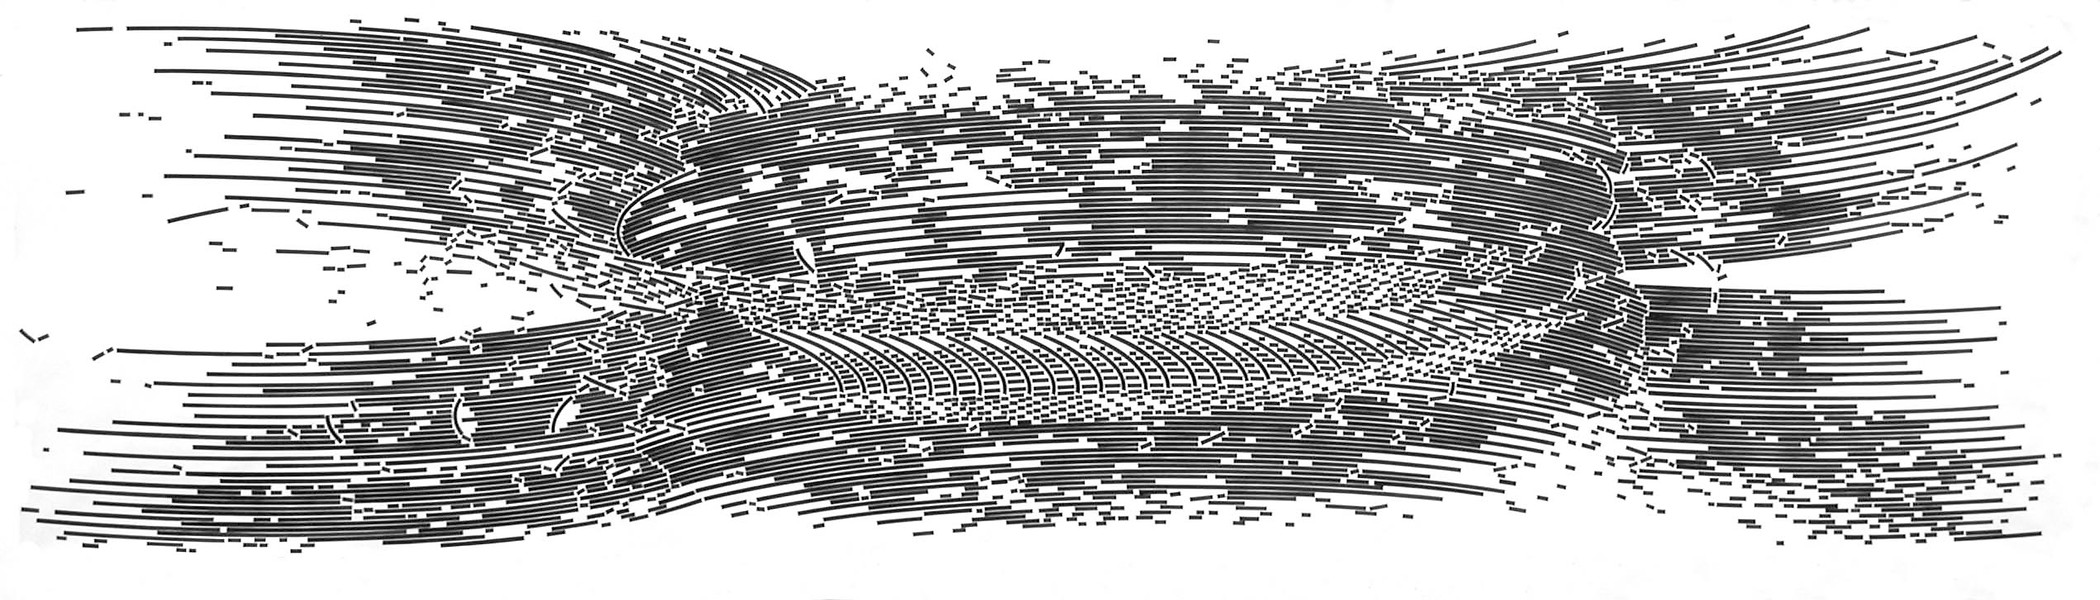 Vinylplot # 40, 2009 – Ed. 5; 91 x 346 cm; Folienplot aus matt schwarzer Vinylfolie